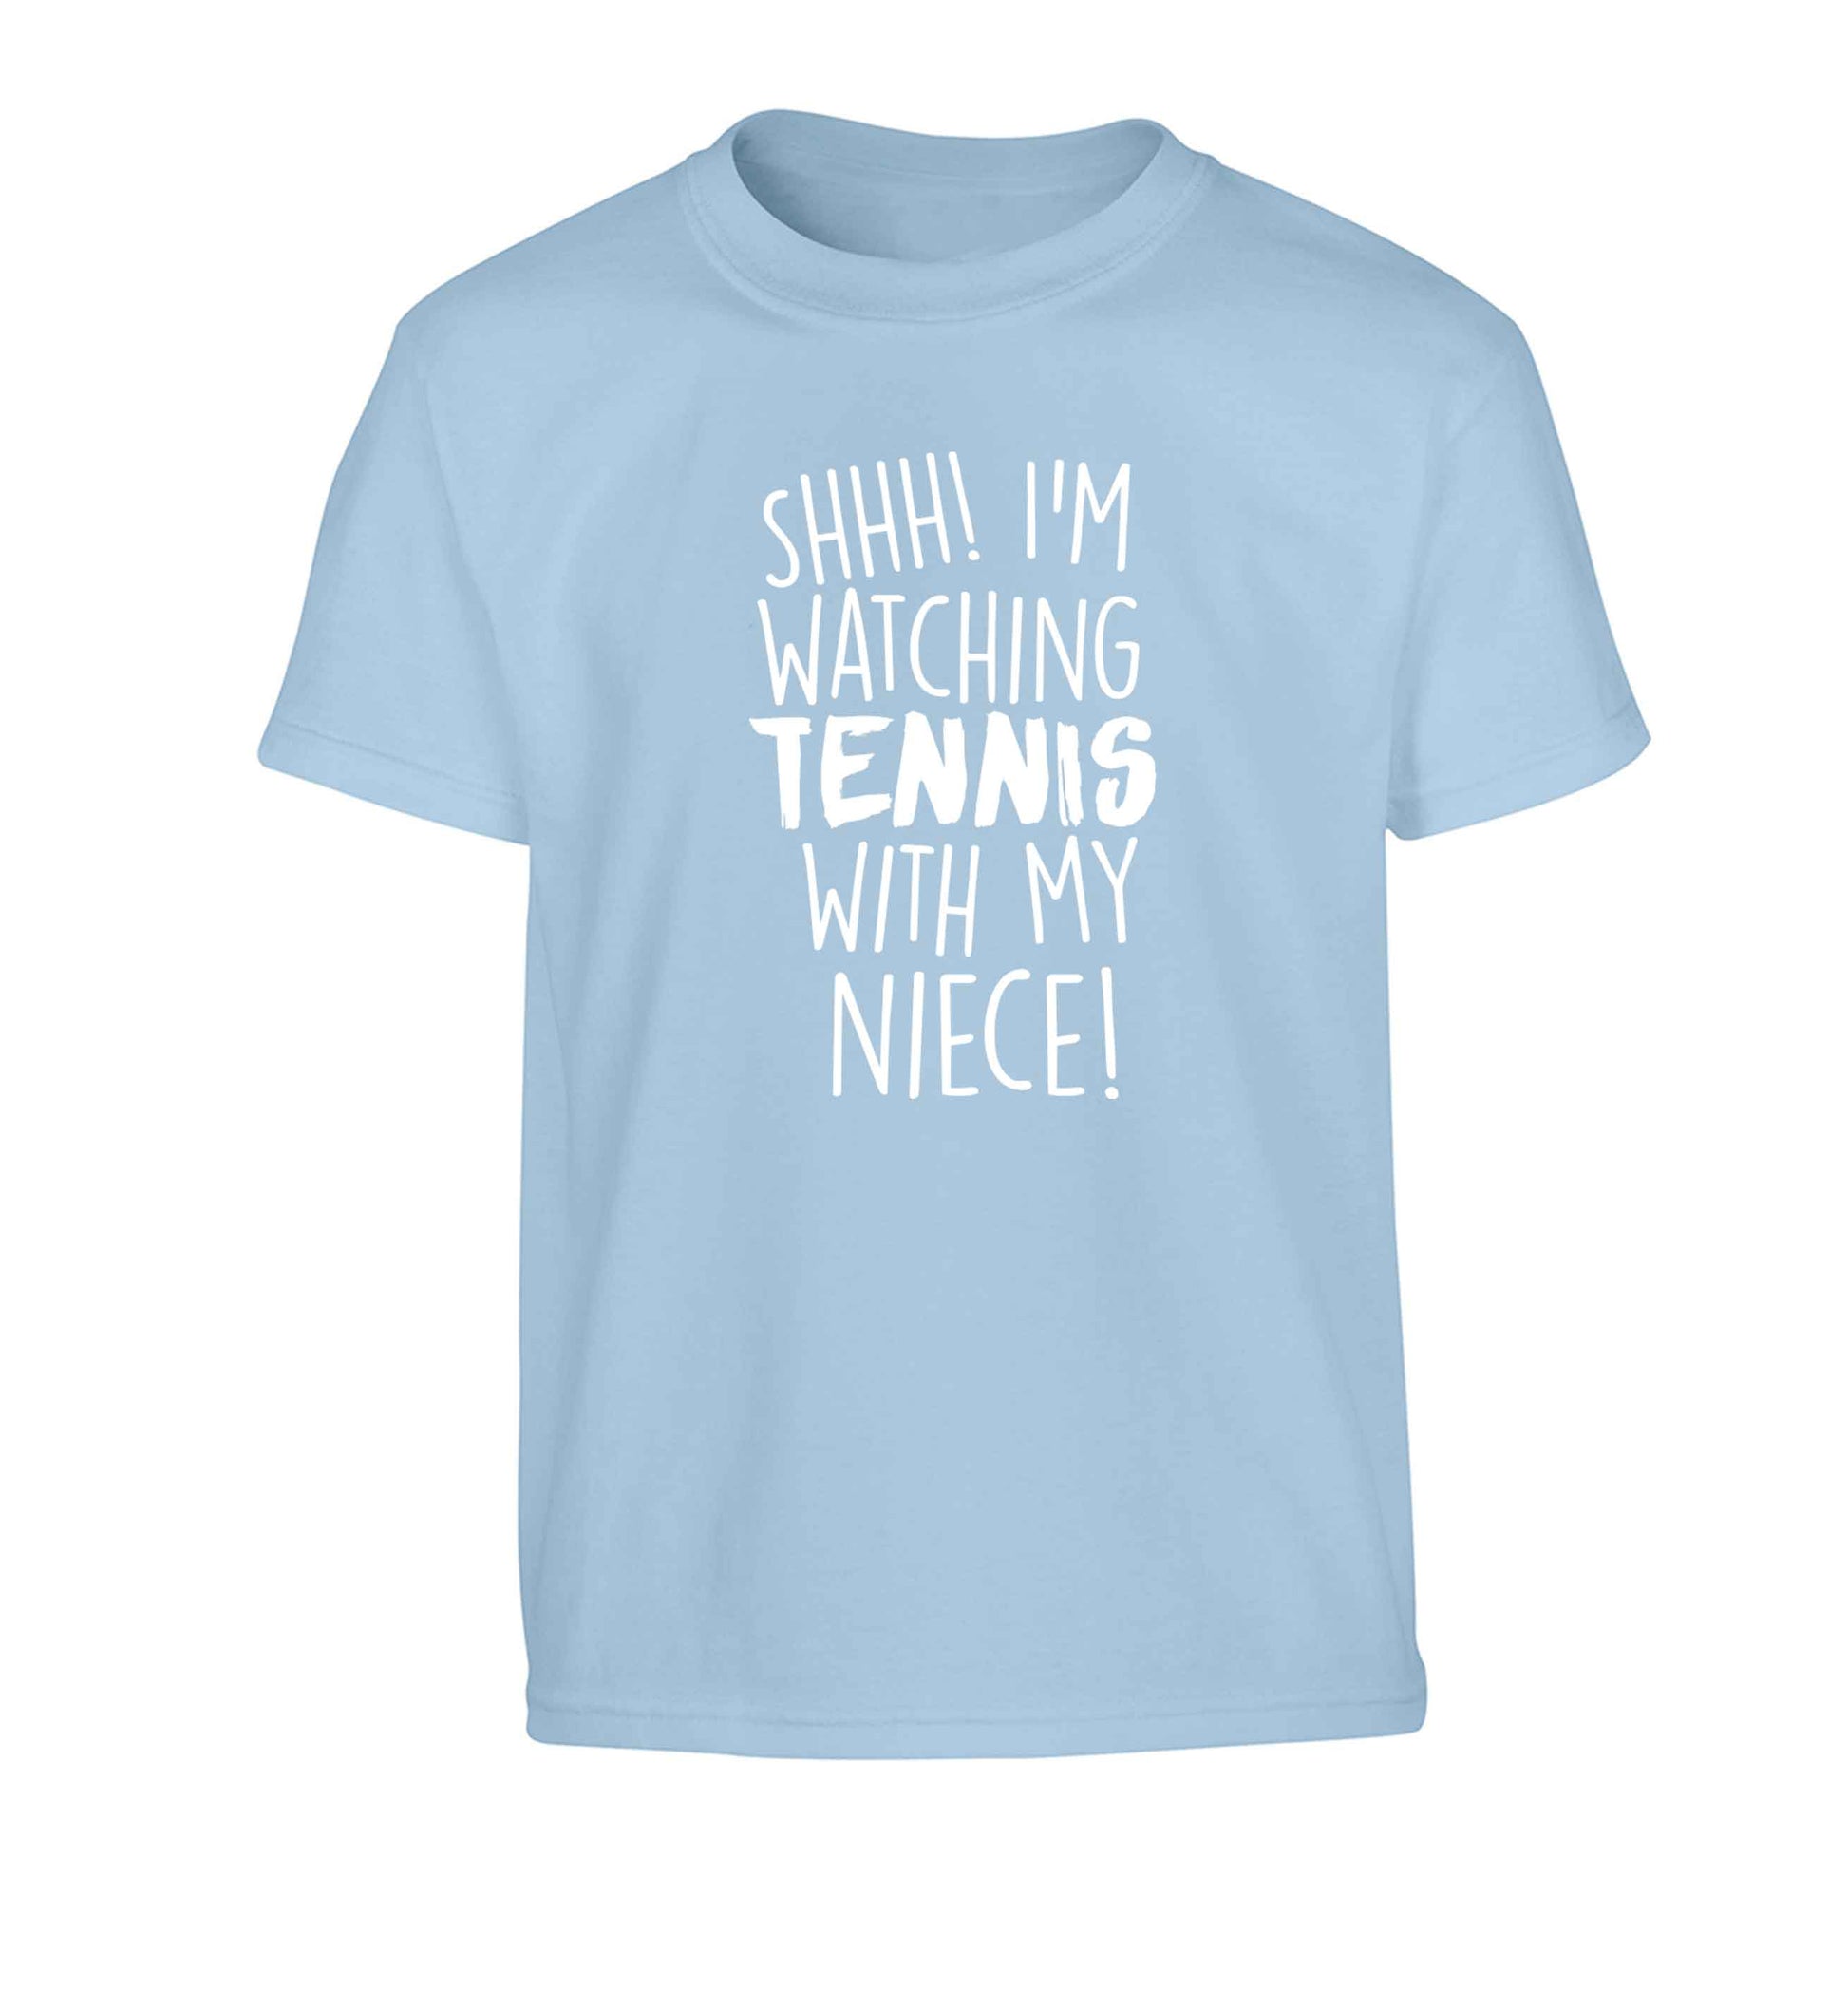 Shh! I'm watching tennis with my niece! Children's light blue Tshirt 12-13 Years